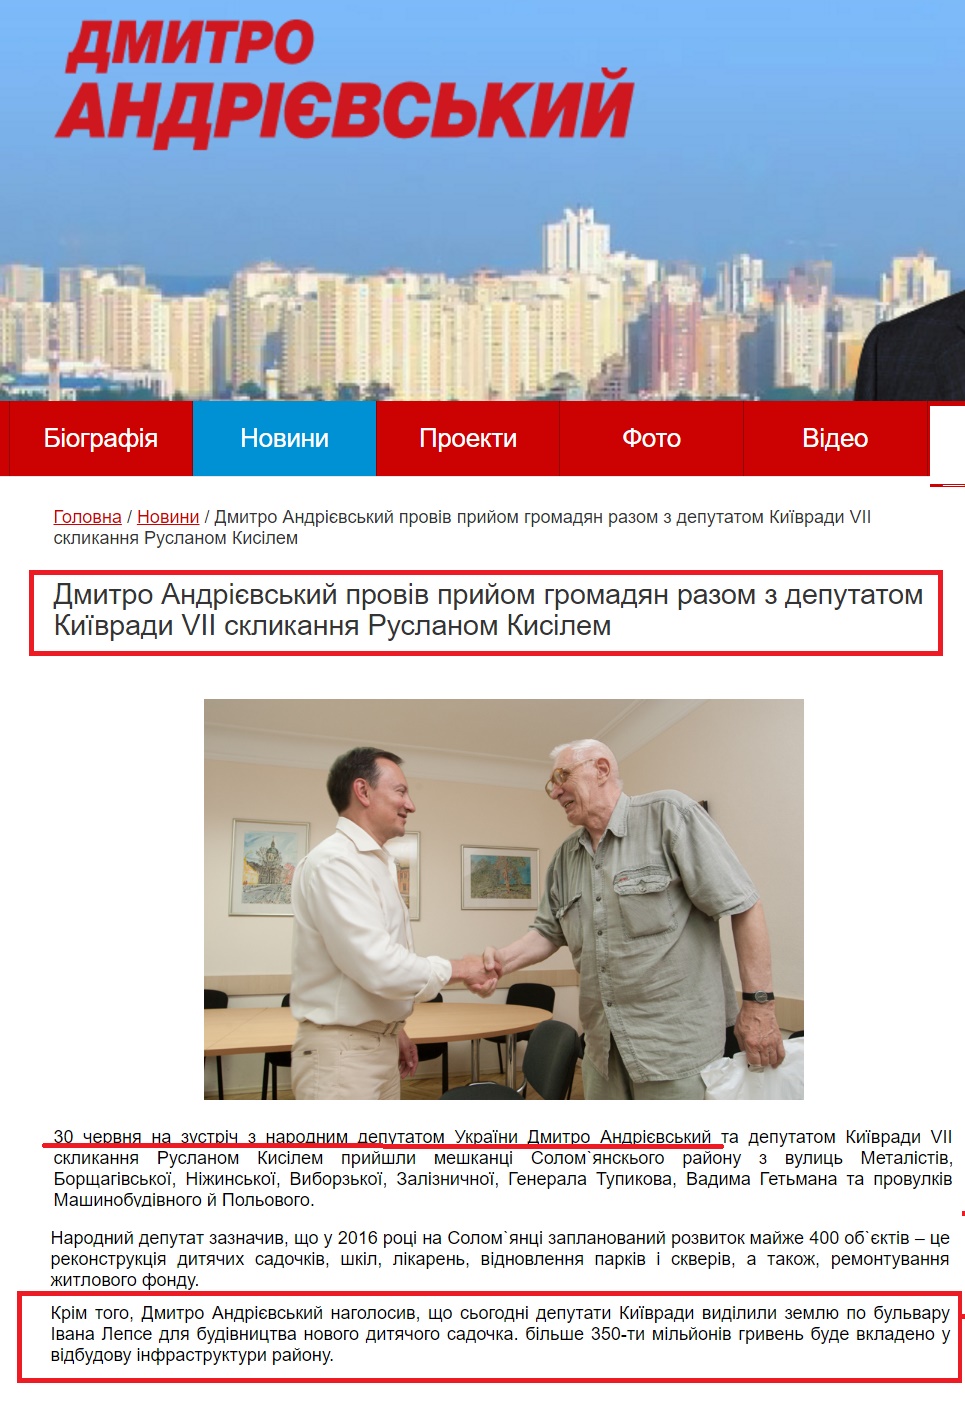 http://www.andrievsky.kiev.ua/news/dmitro-andr-vskii-prov-v-priiom-gromadian-razom-z-deputatom-ki-vradi-vii-sklikannia-ruslanom-kis-lem